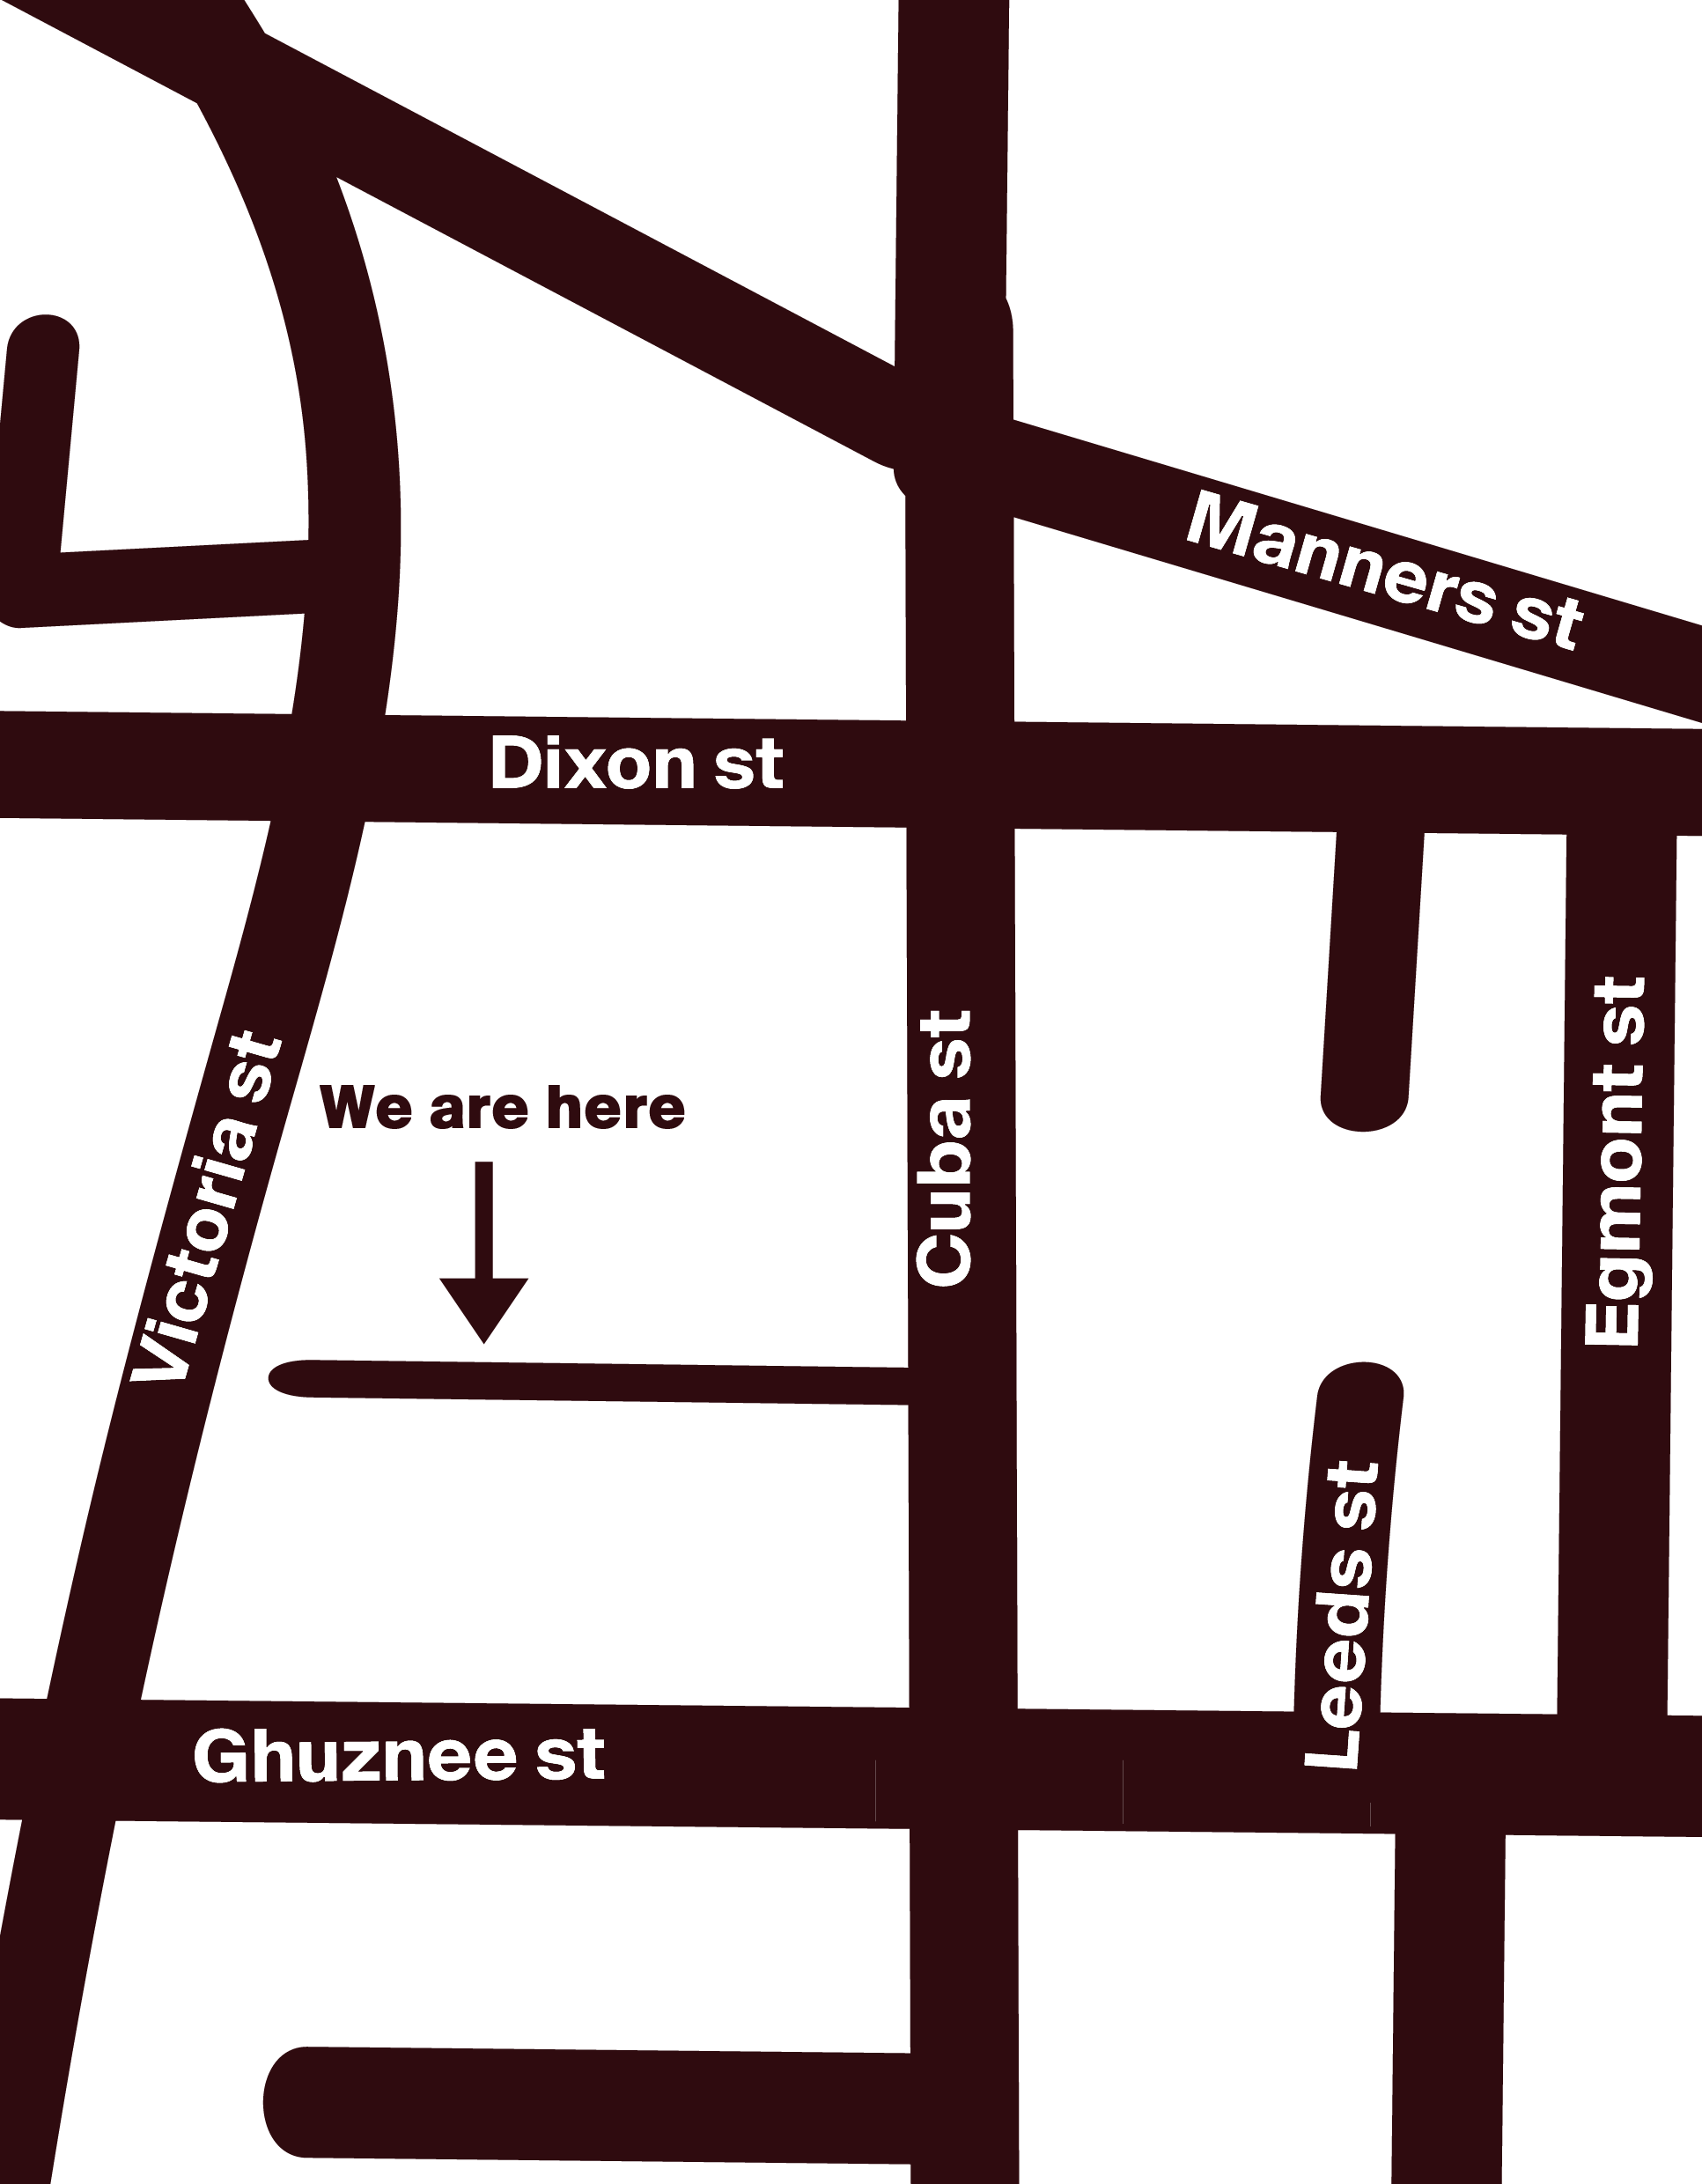 Map of Te Aro showing Enjoy's location